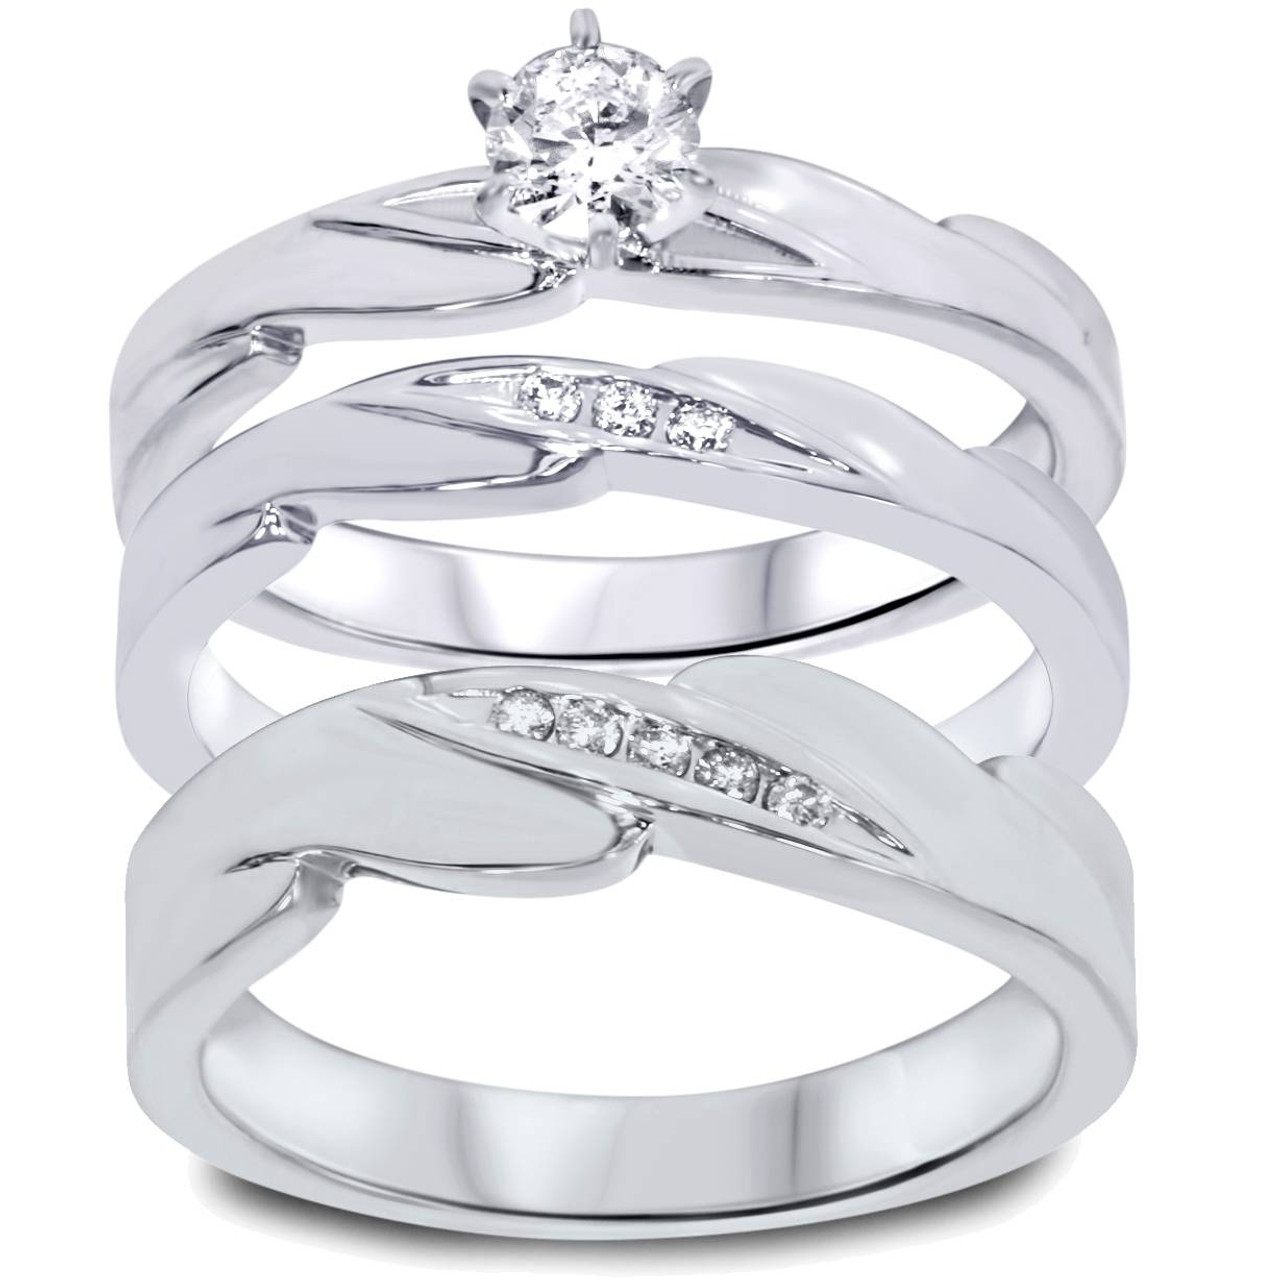 My Trio Rings - The Jasmine trio ring set https://www.mytriorings.com/trio- ring-sets/bt573w14k-c000-3-4-carat-t-w-round-cut-diamond-matching-trio -wedding-ring-set-14k-white-gold.html?utm_source=fb&utm_medium=org&utm_campaign=jasmine&utm_term  ...